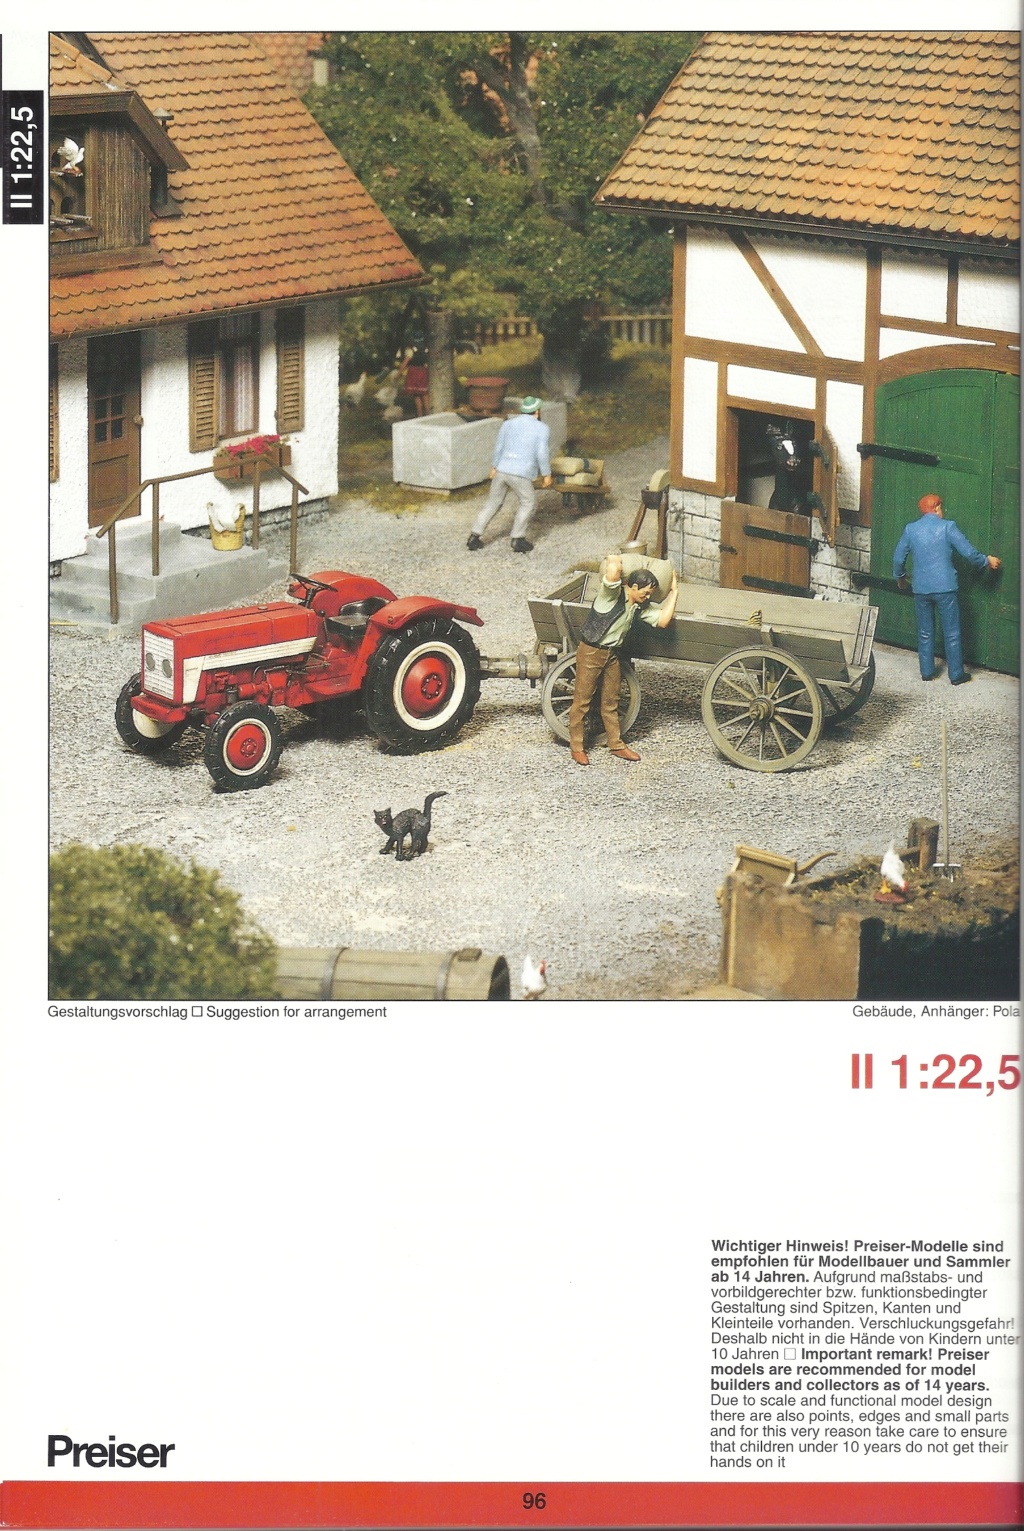 preiser - [PREISER 1996] Catalogue K22 1996 Preis986